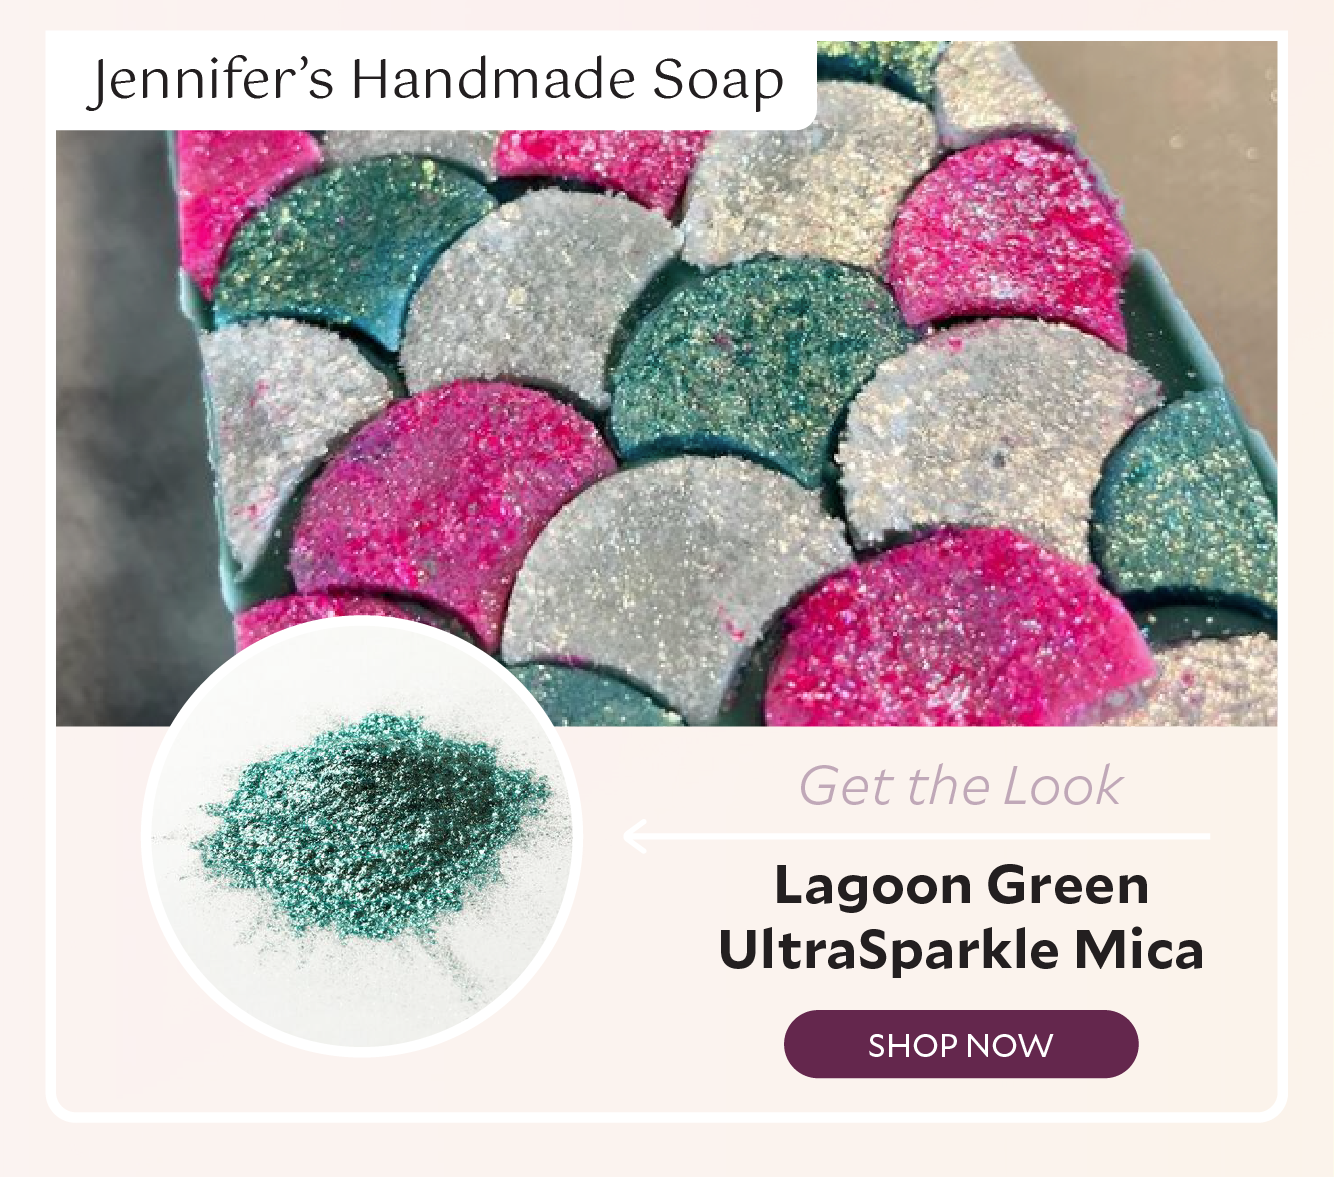 Jennifer's Handmade Soap used Lagoon Green UltraSparkle Mica for this soap!